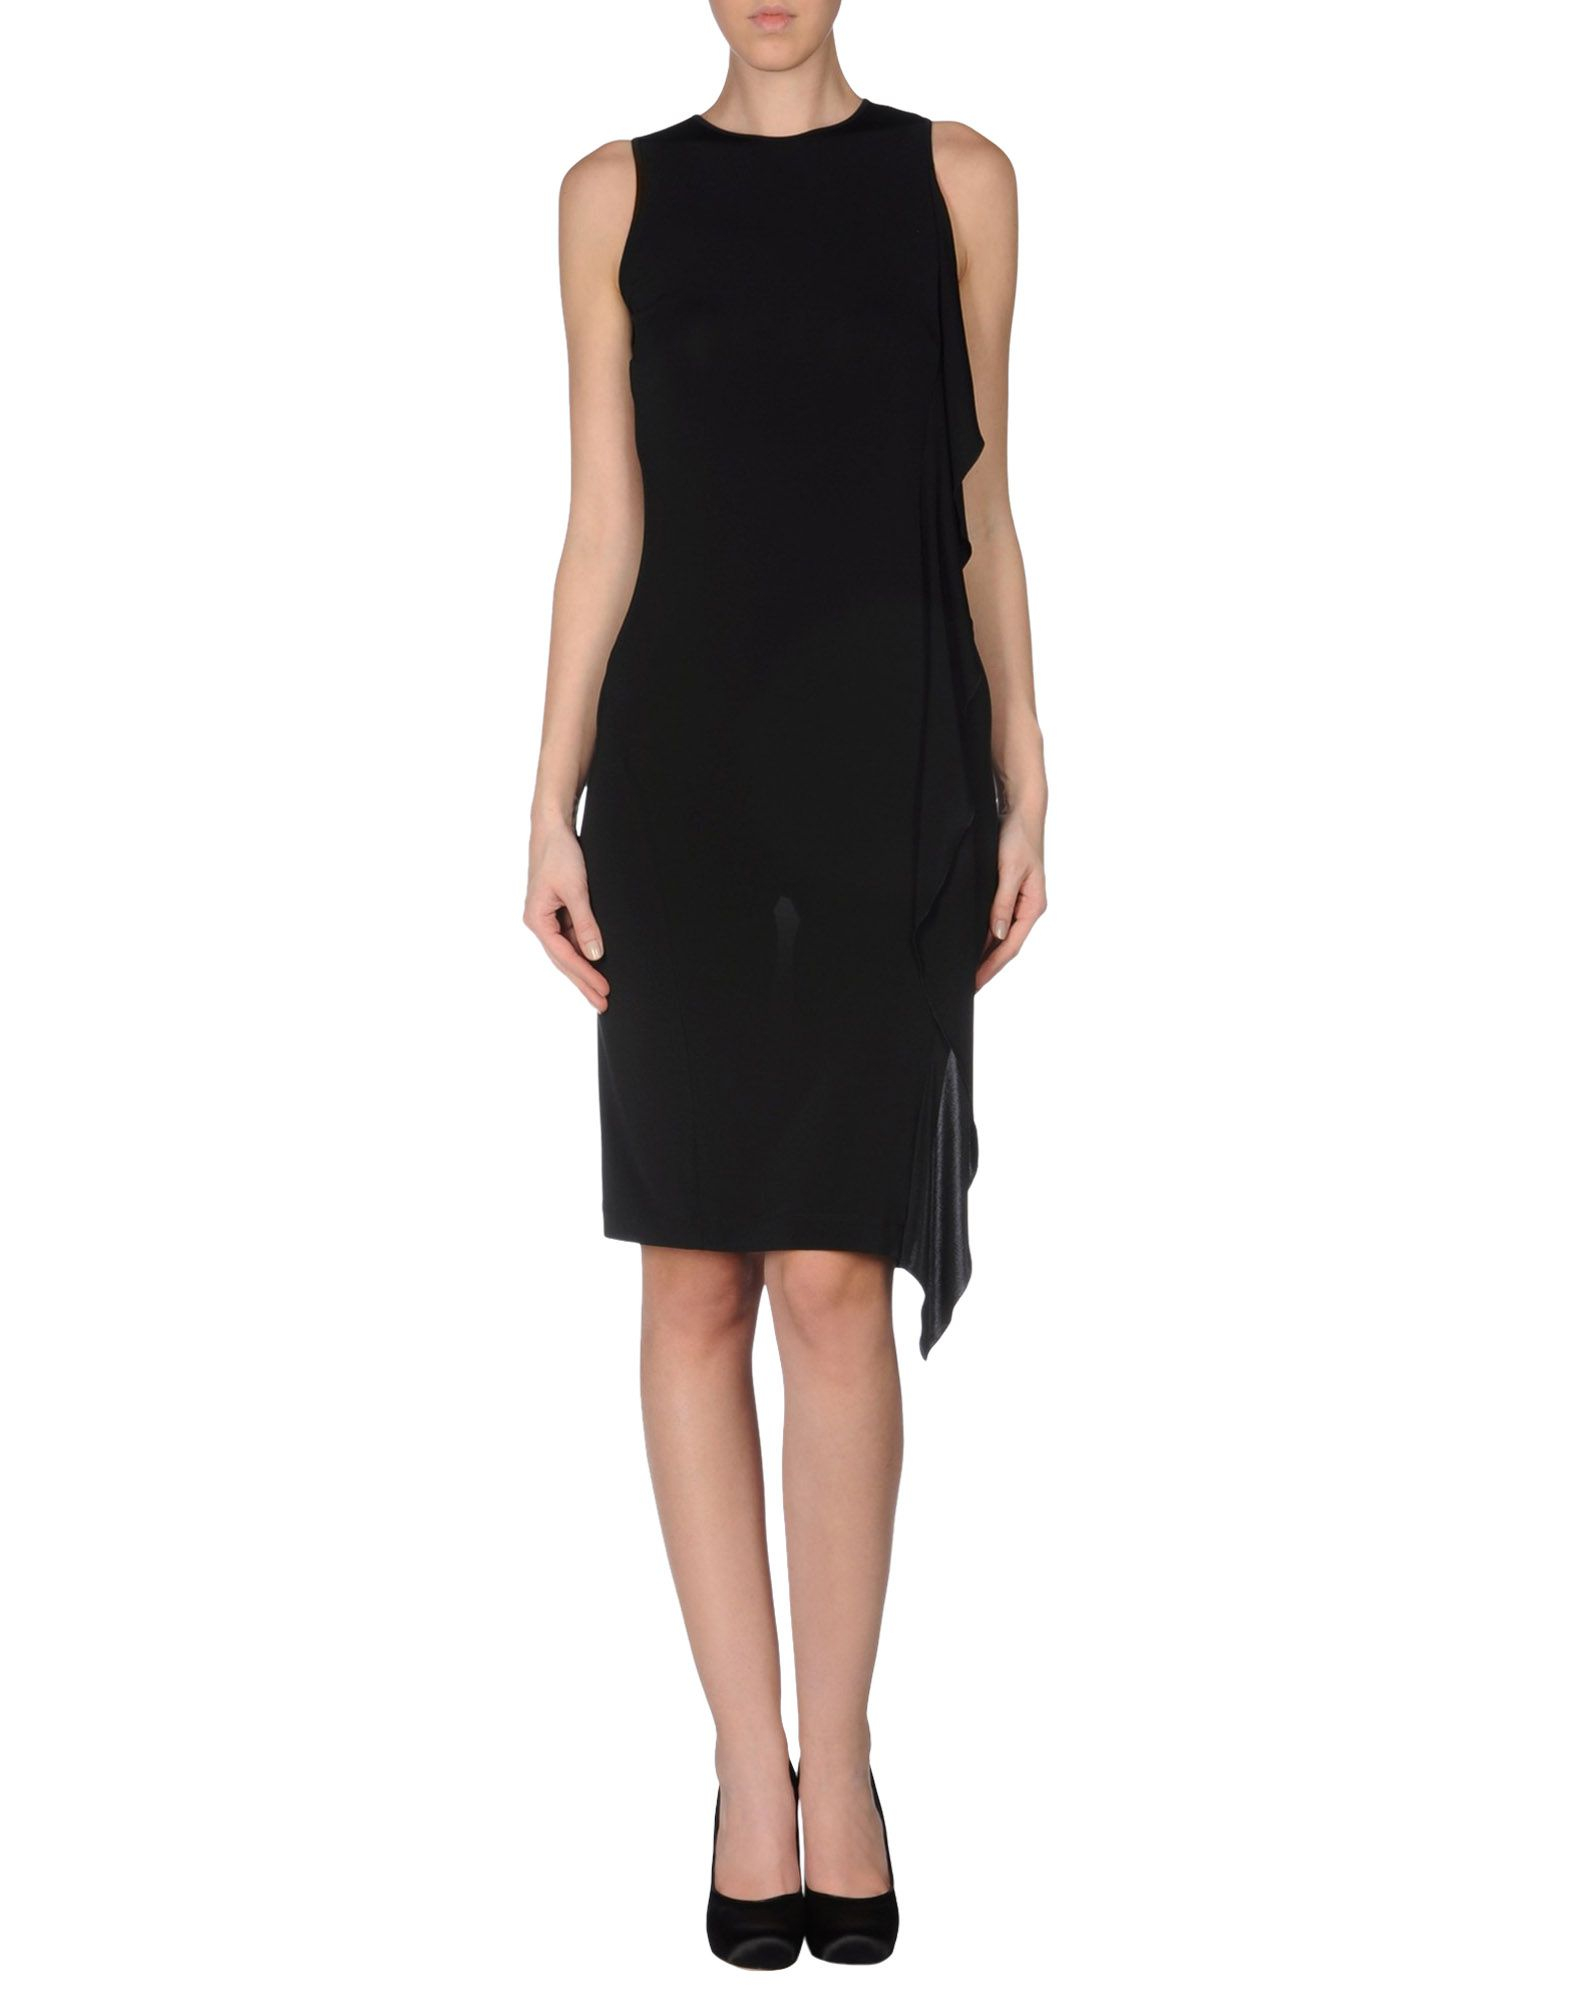 Black knee length dress size 16 dresses lewis